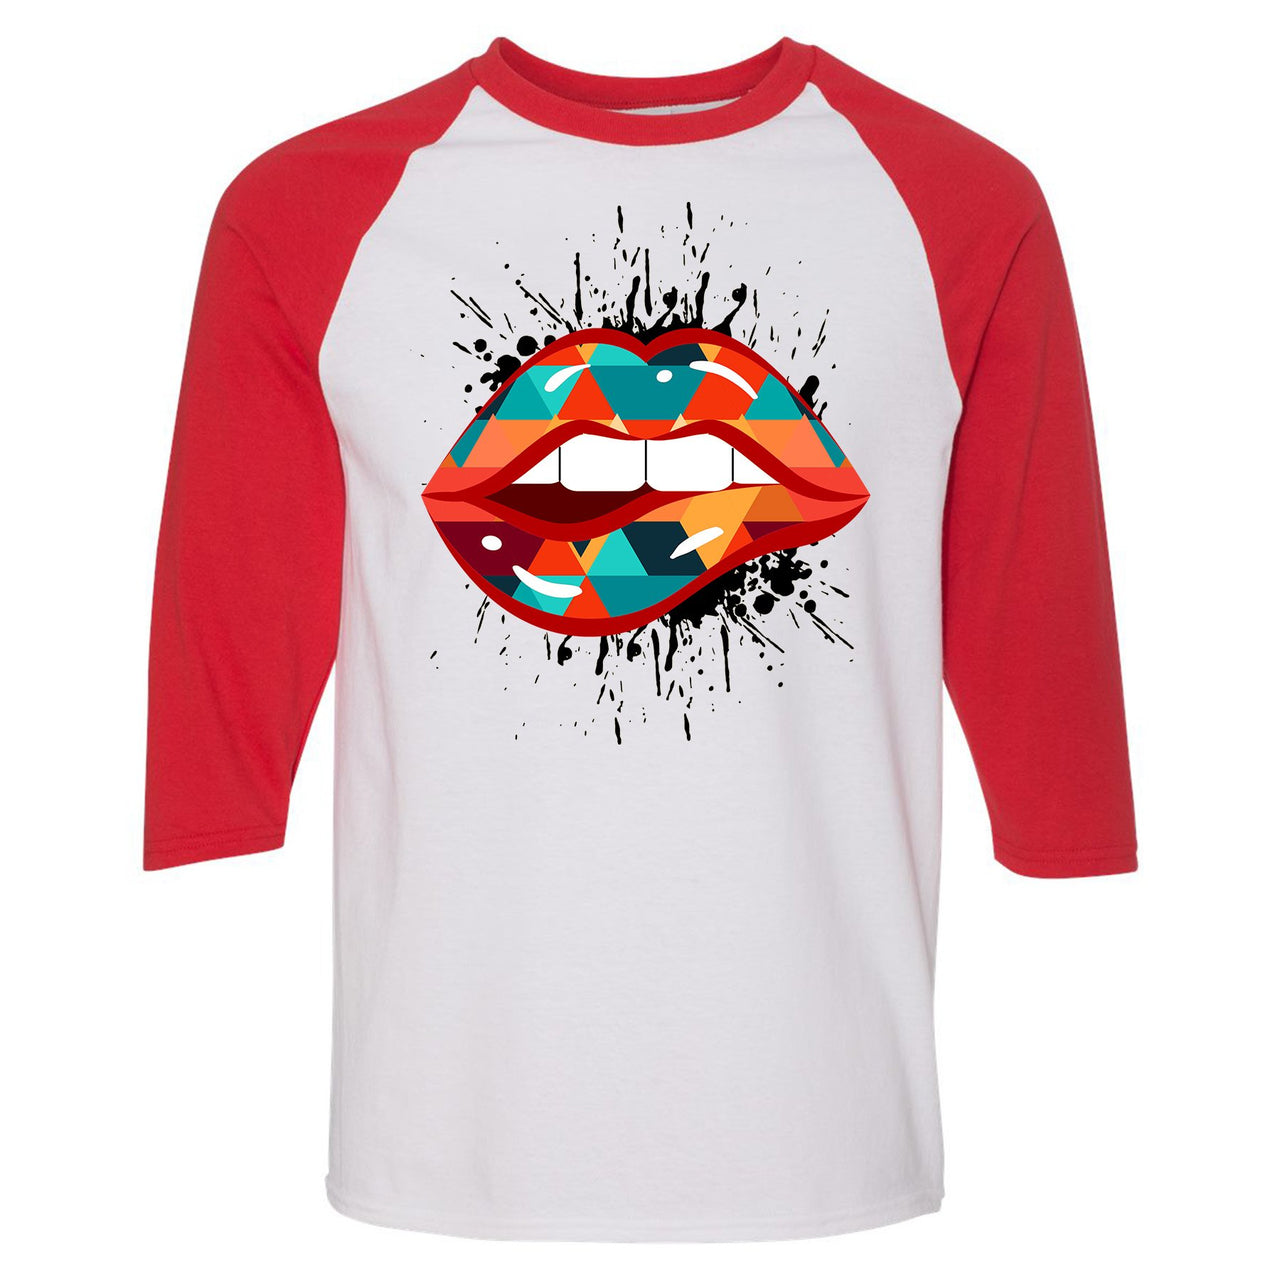 Multicolor 98s Raglan T Shirt | Lips Geometric Design, White and Red